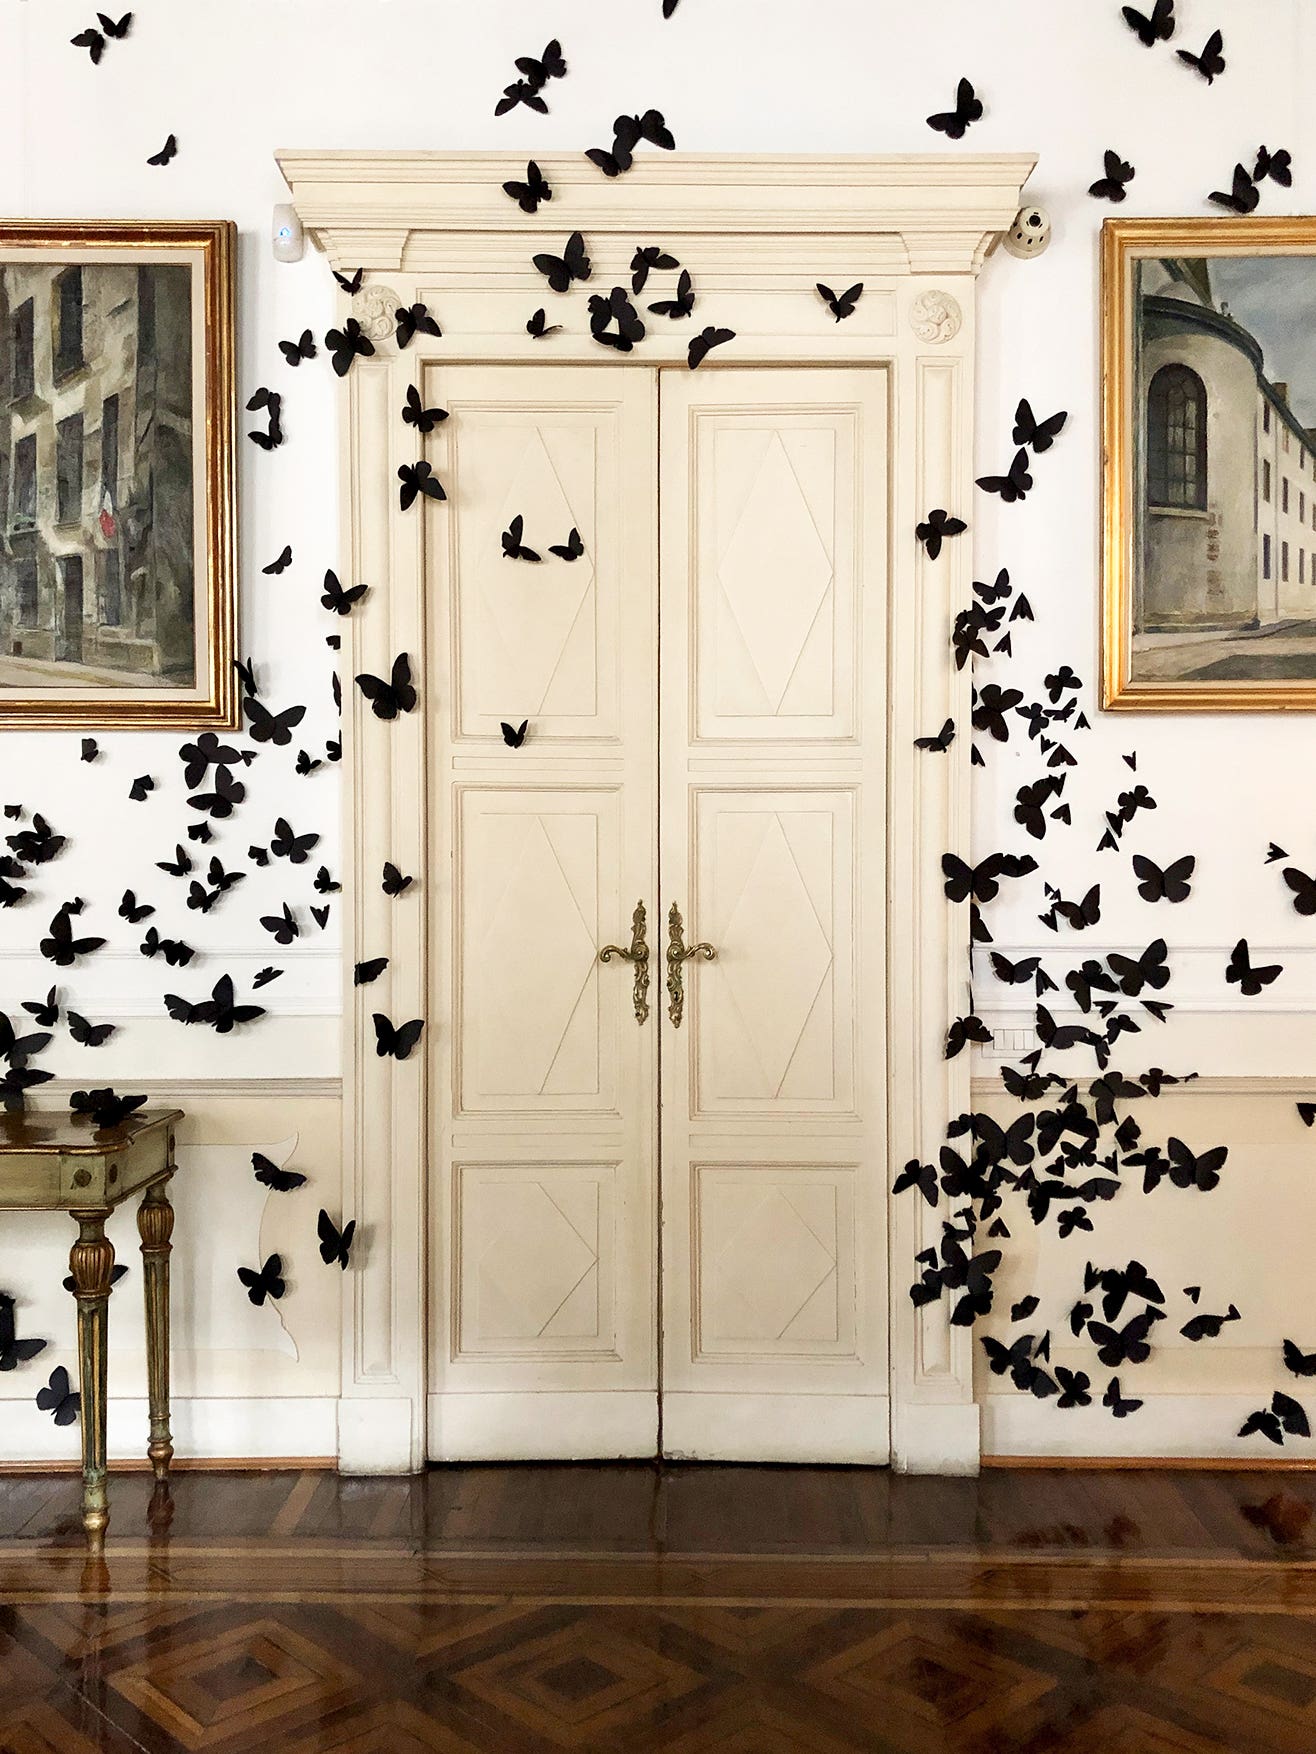 black butterflies swarm around an old doorway